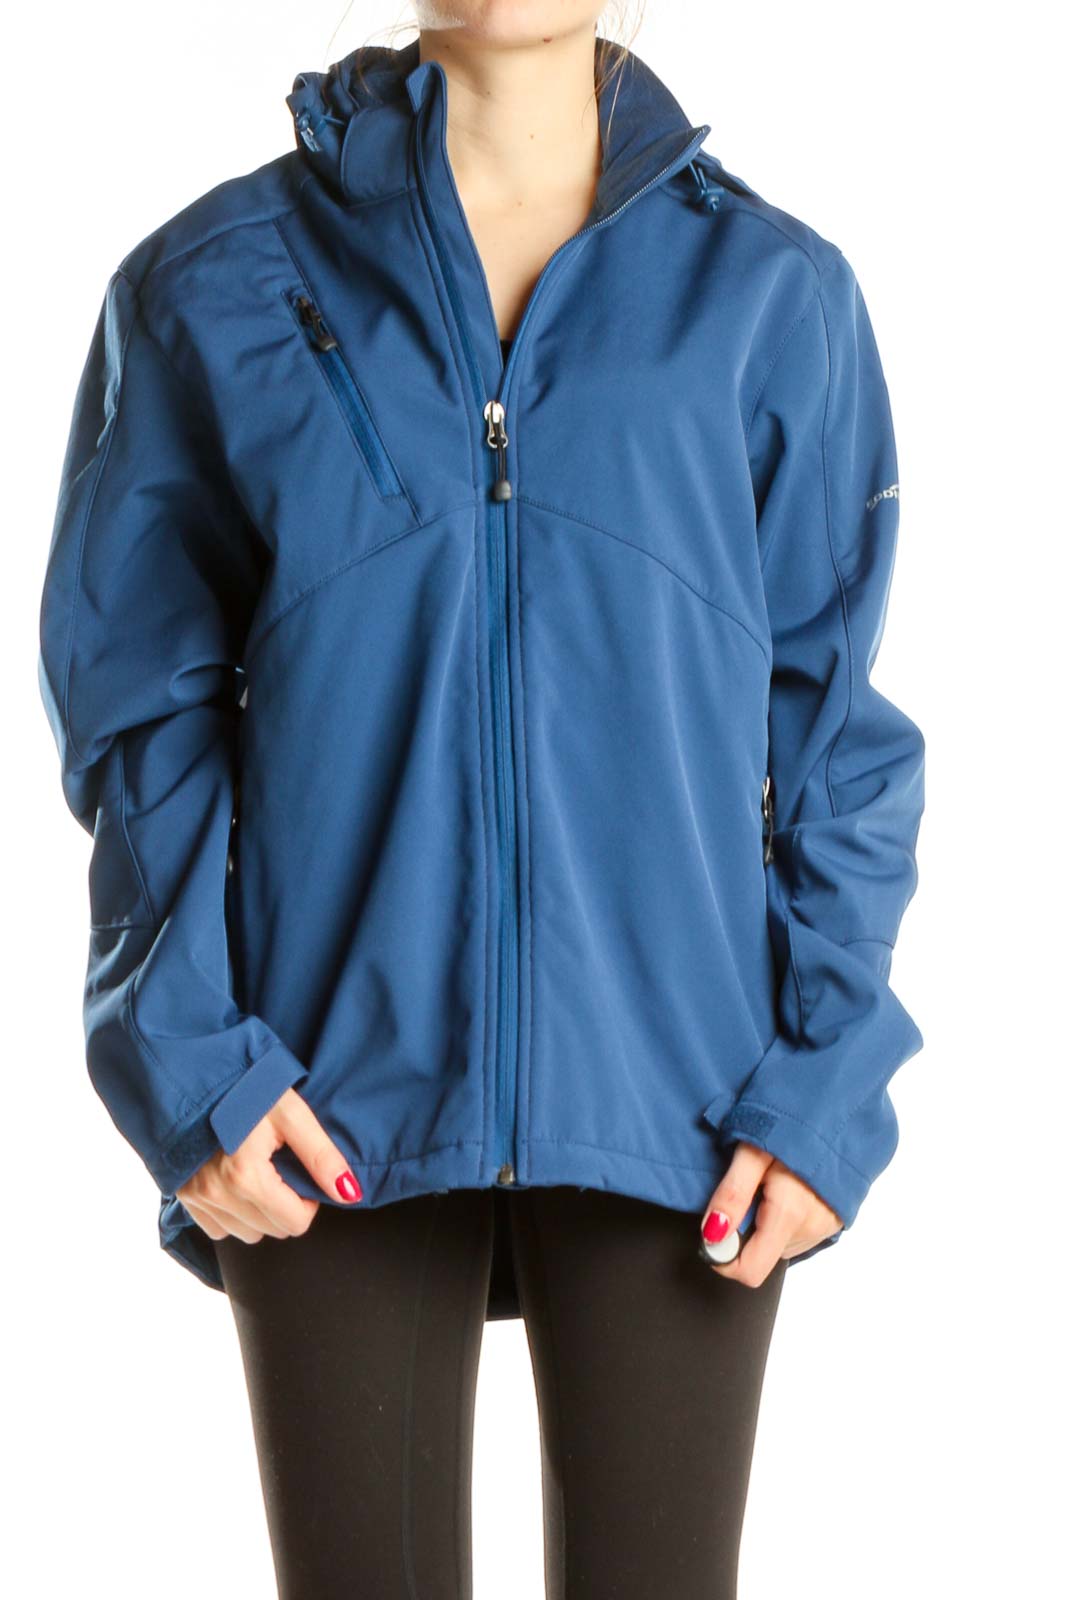 Blue Rain Jacket Front